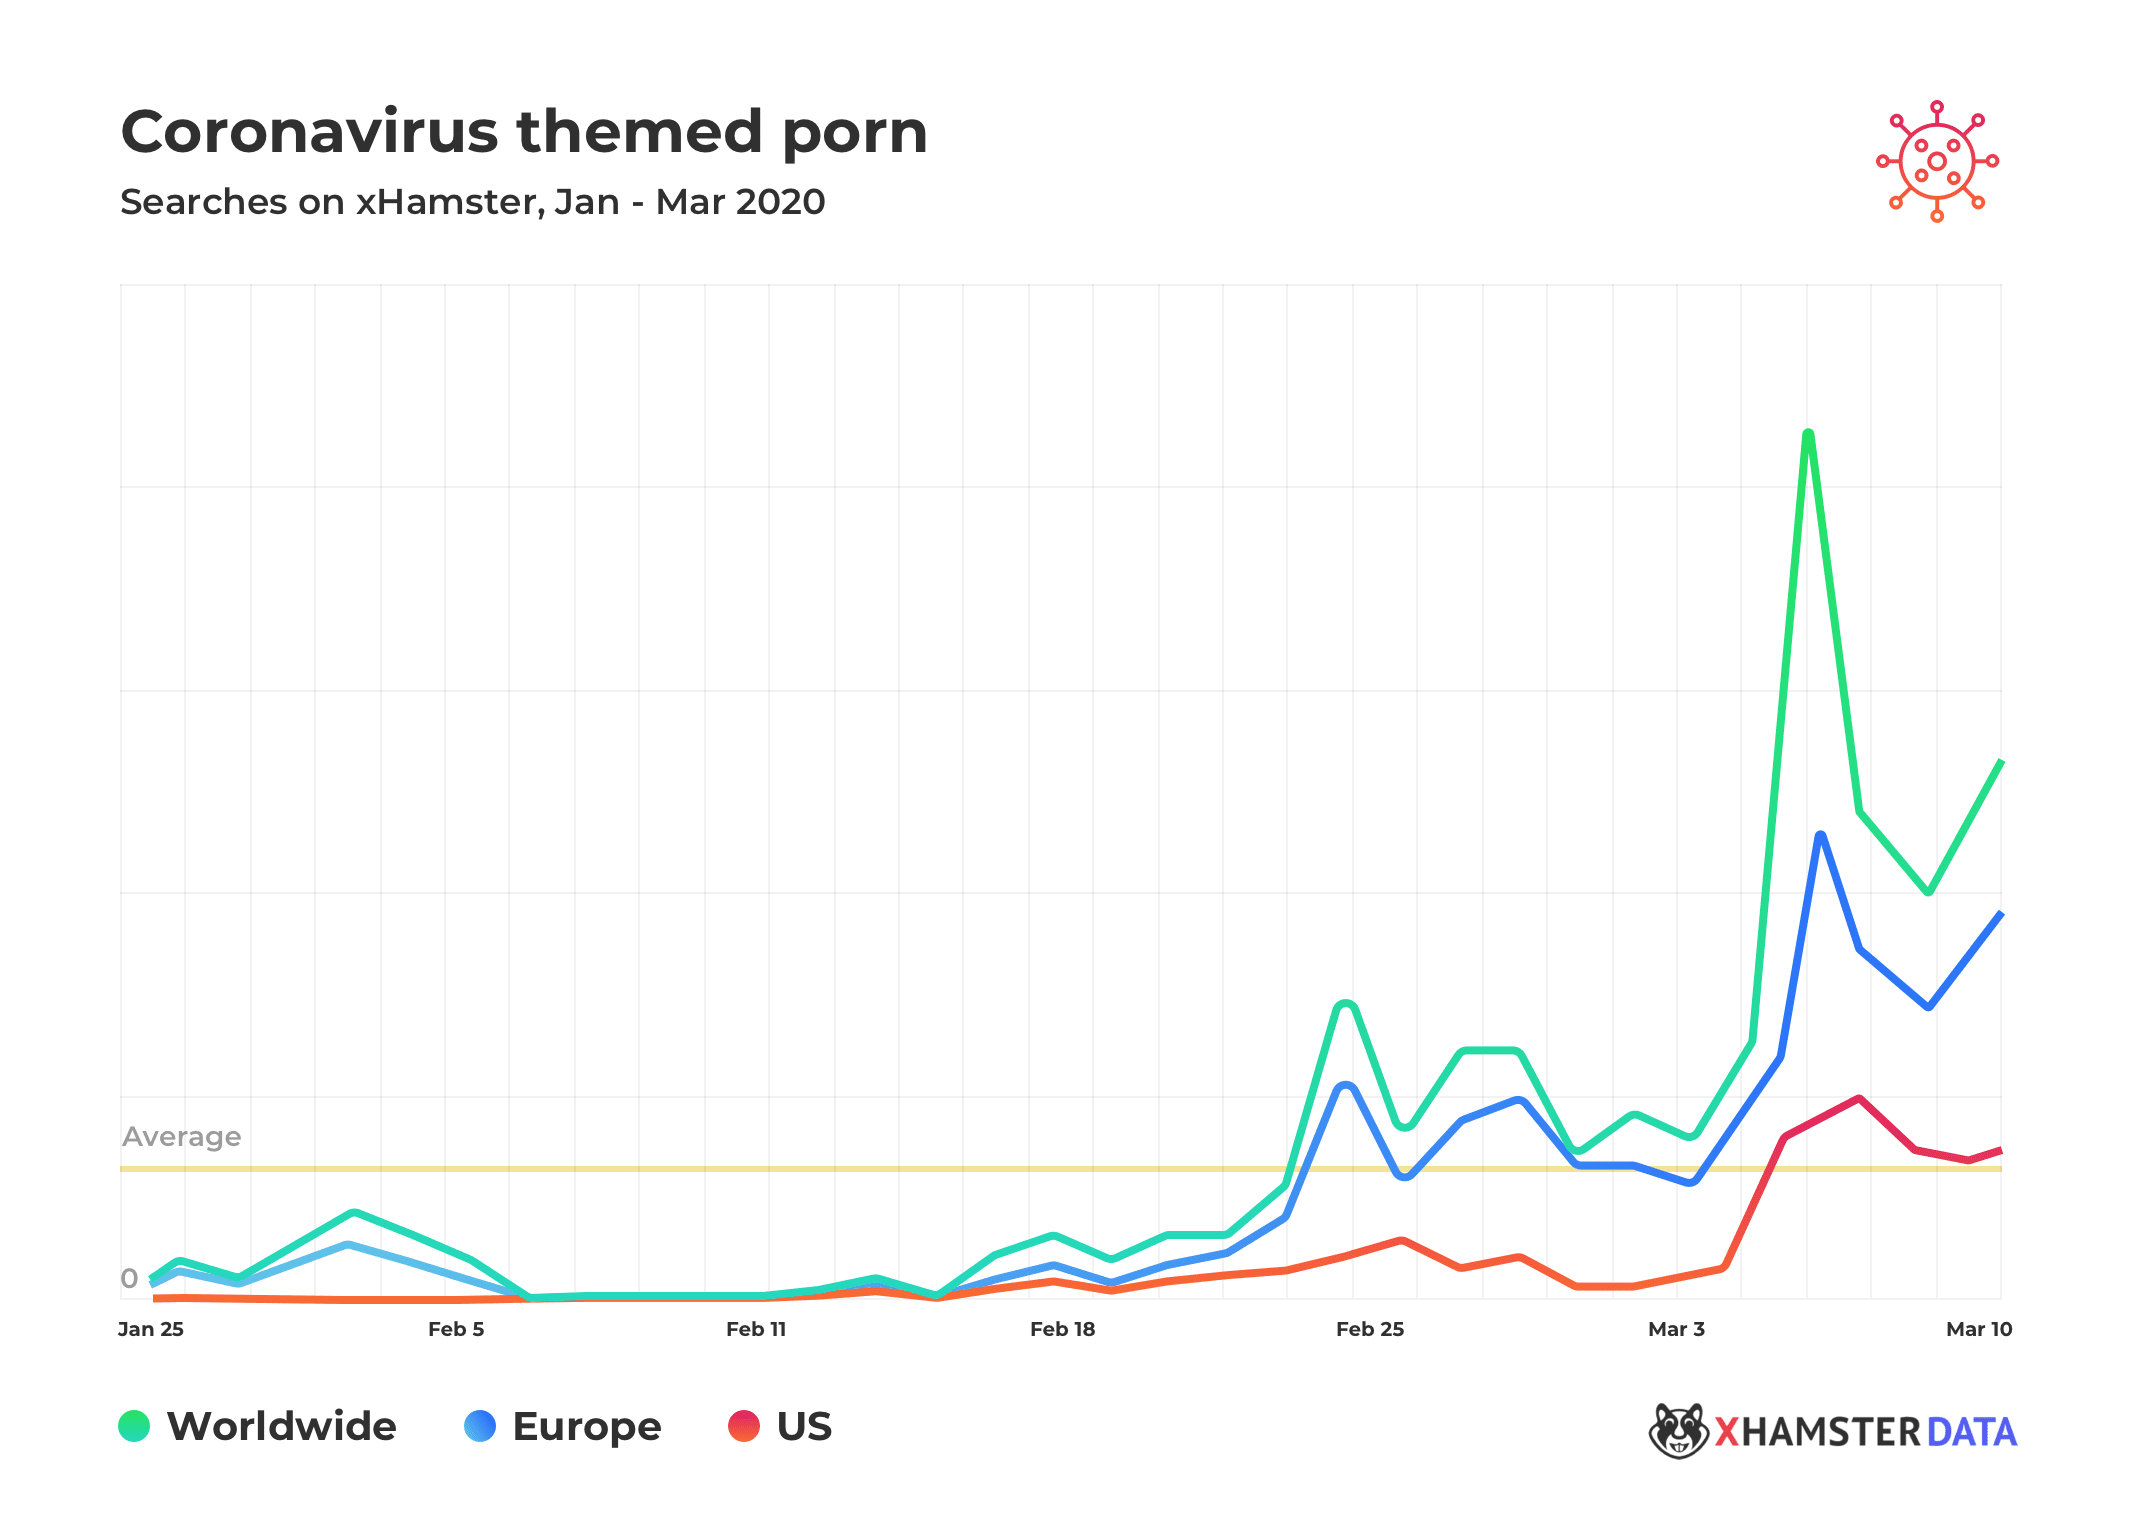 Porn sites have turned coronavirus into a viral marketing scheme